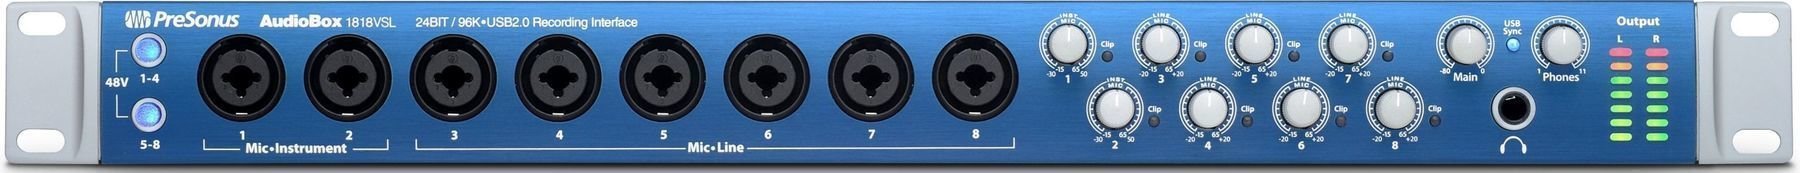 Interface audio USB Presonus AudioBox 1818 VSL